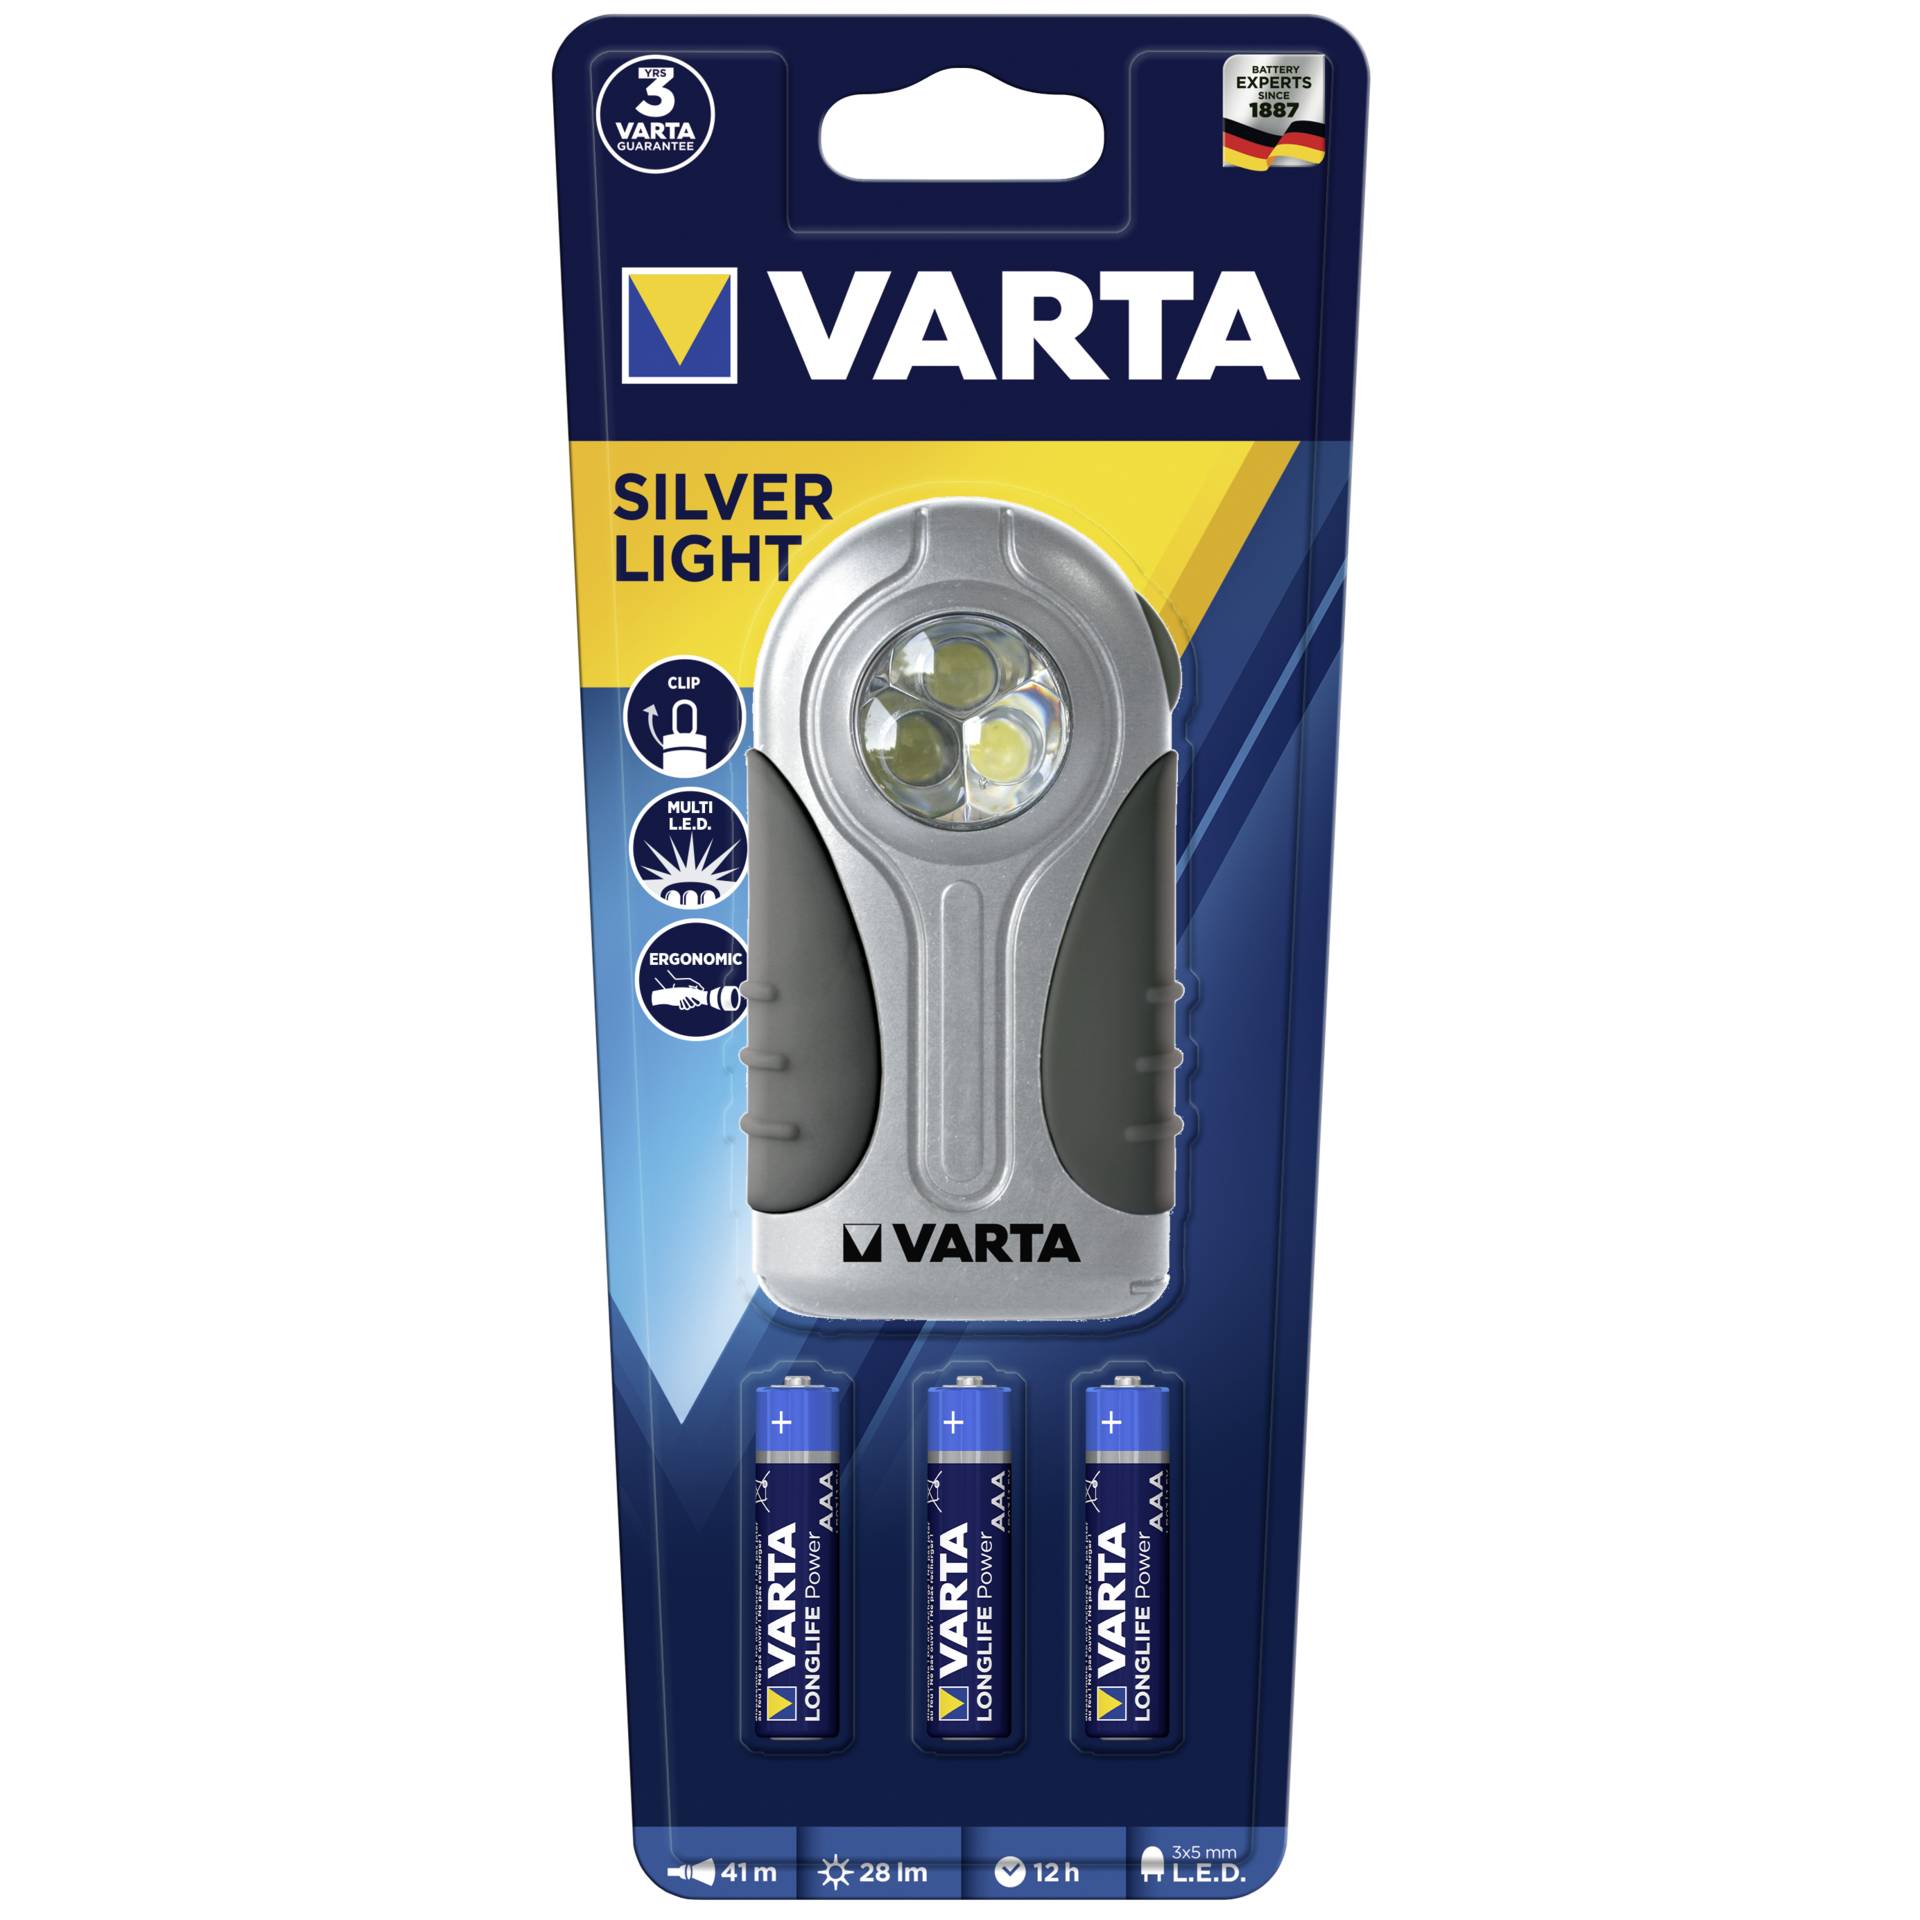 Varta LED argento Light 3 AAA Easy-Line